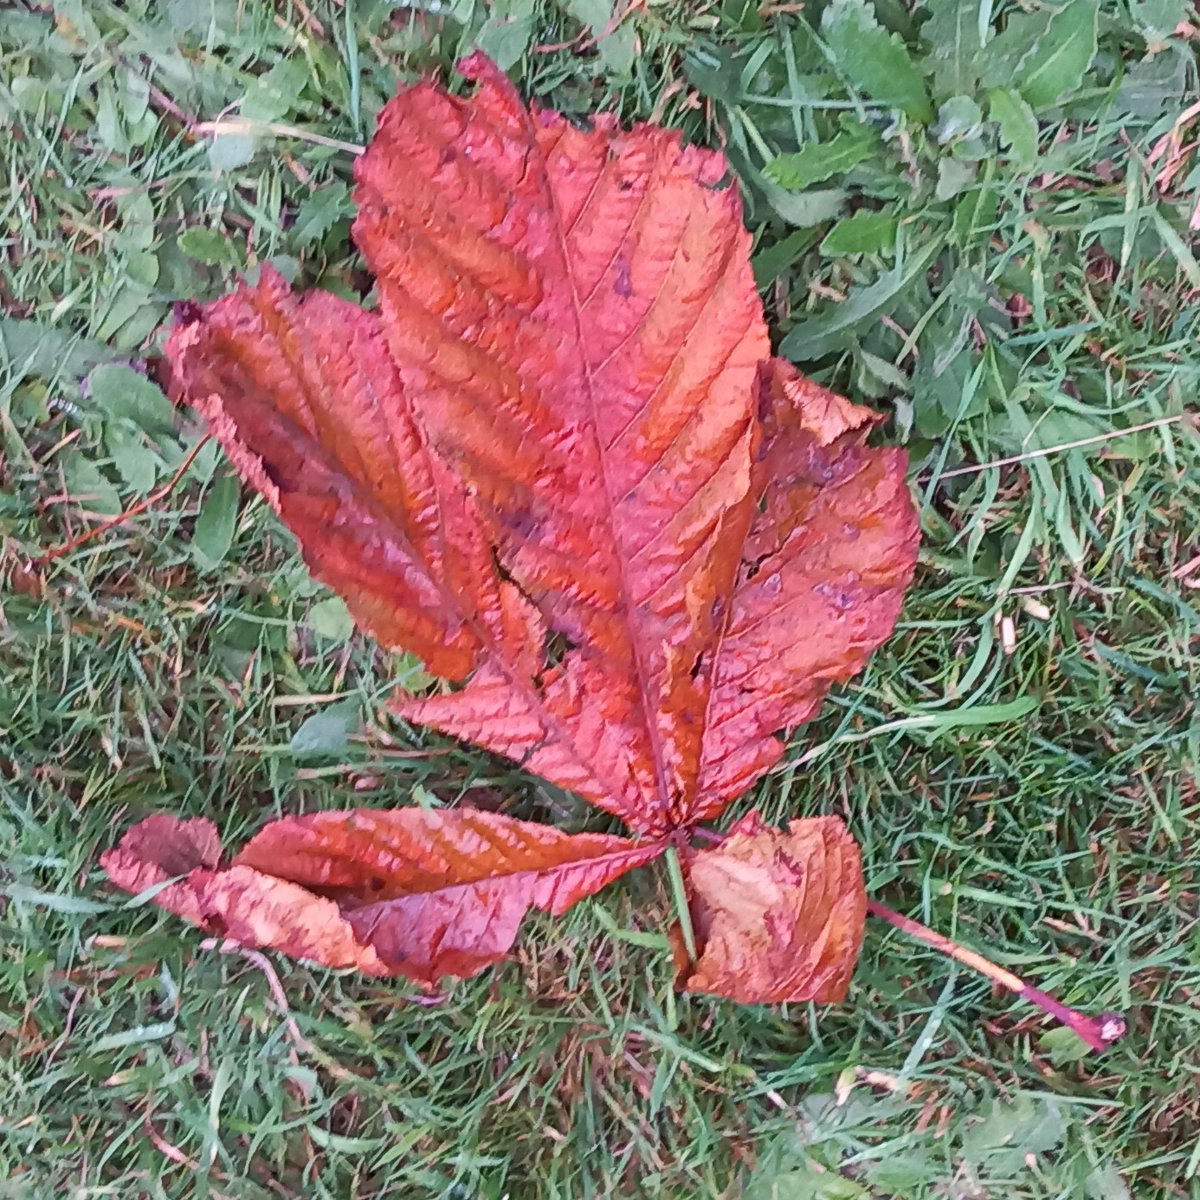 @CAYMUSOCAUGHEY 🐦 

Fallen Leaf

#Autumn #Fall #AutumnIsComing #AutumnOfTwitter #Leaf #Leaves #ChestnutTree #HorseChestnut #AutumnLeaf #AutumnLeaves #Grass #MagicWoods #WoodlandWalks #LittleThingsMatter